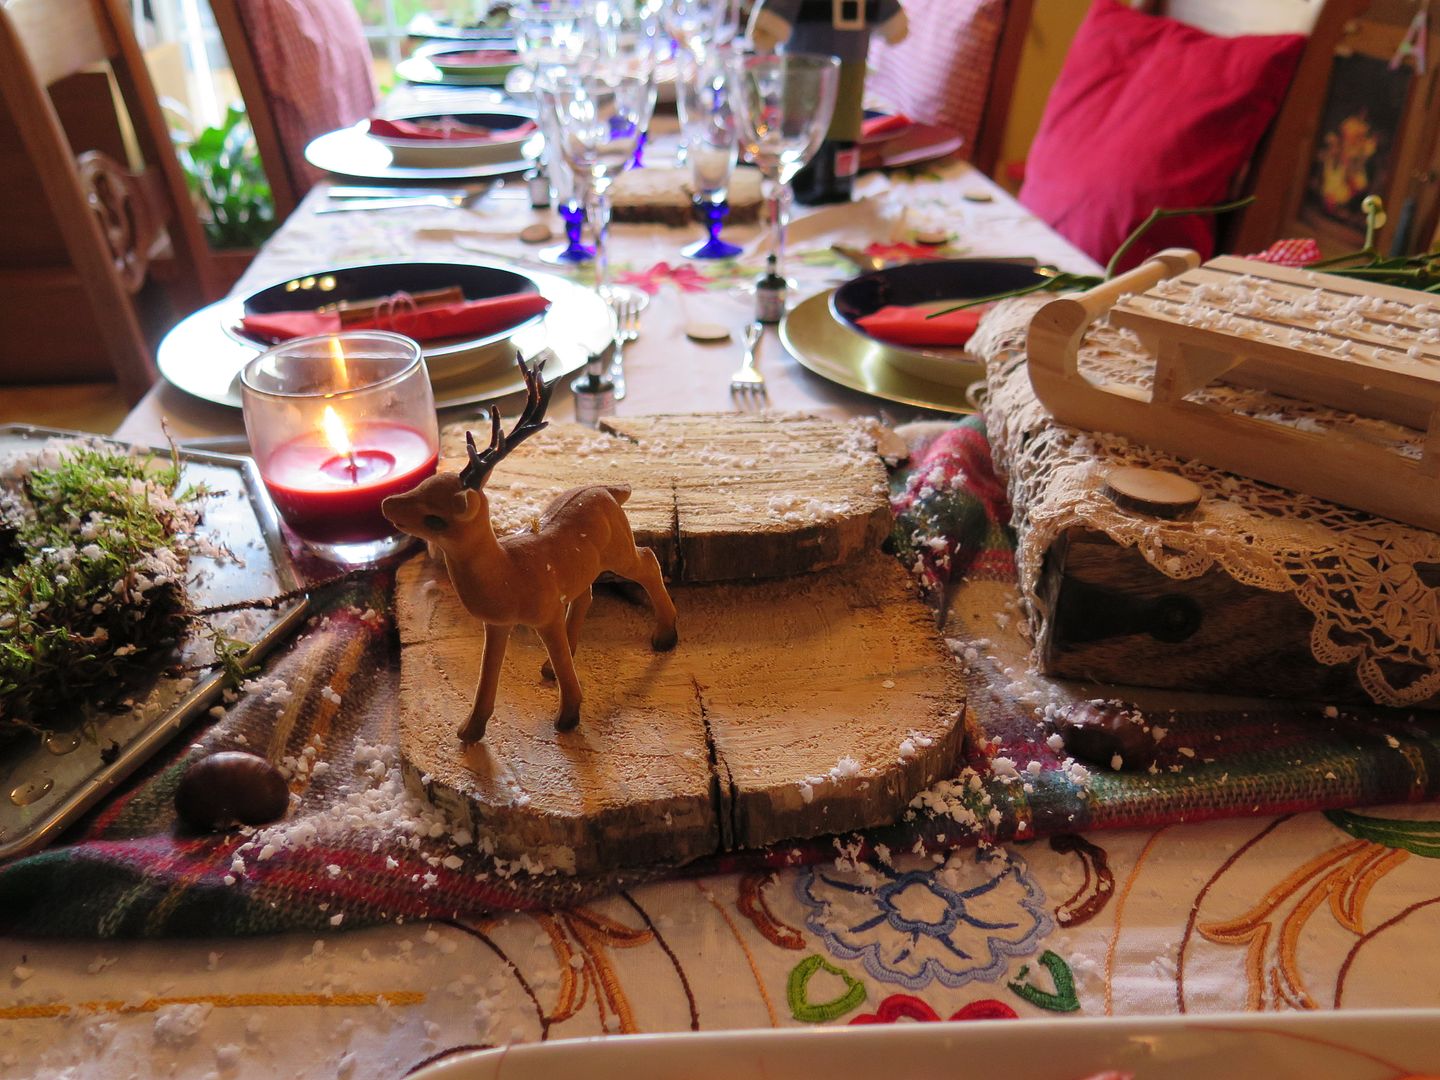  photo mesa-navidad-invierno-decoracioacuten-troncos-madera5_zps5b8c16e9.jpg